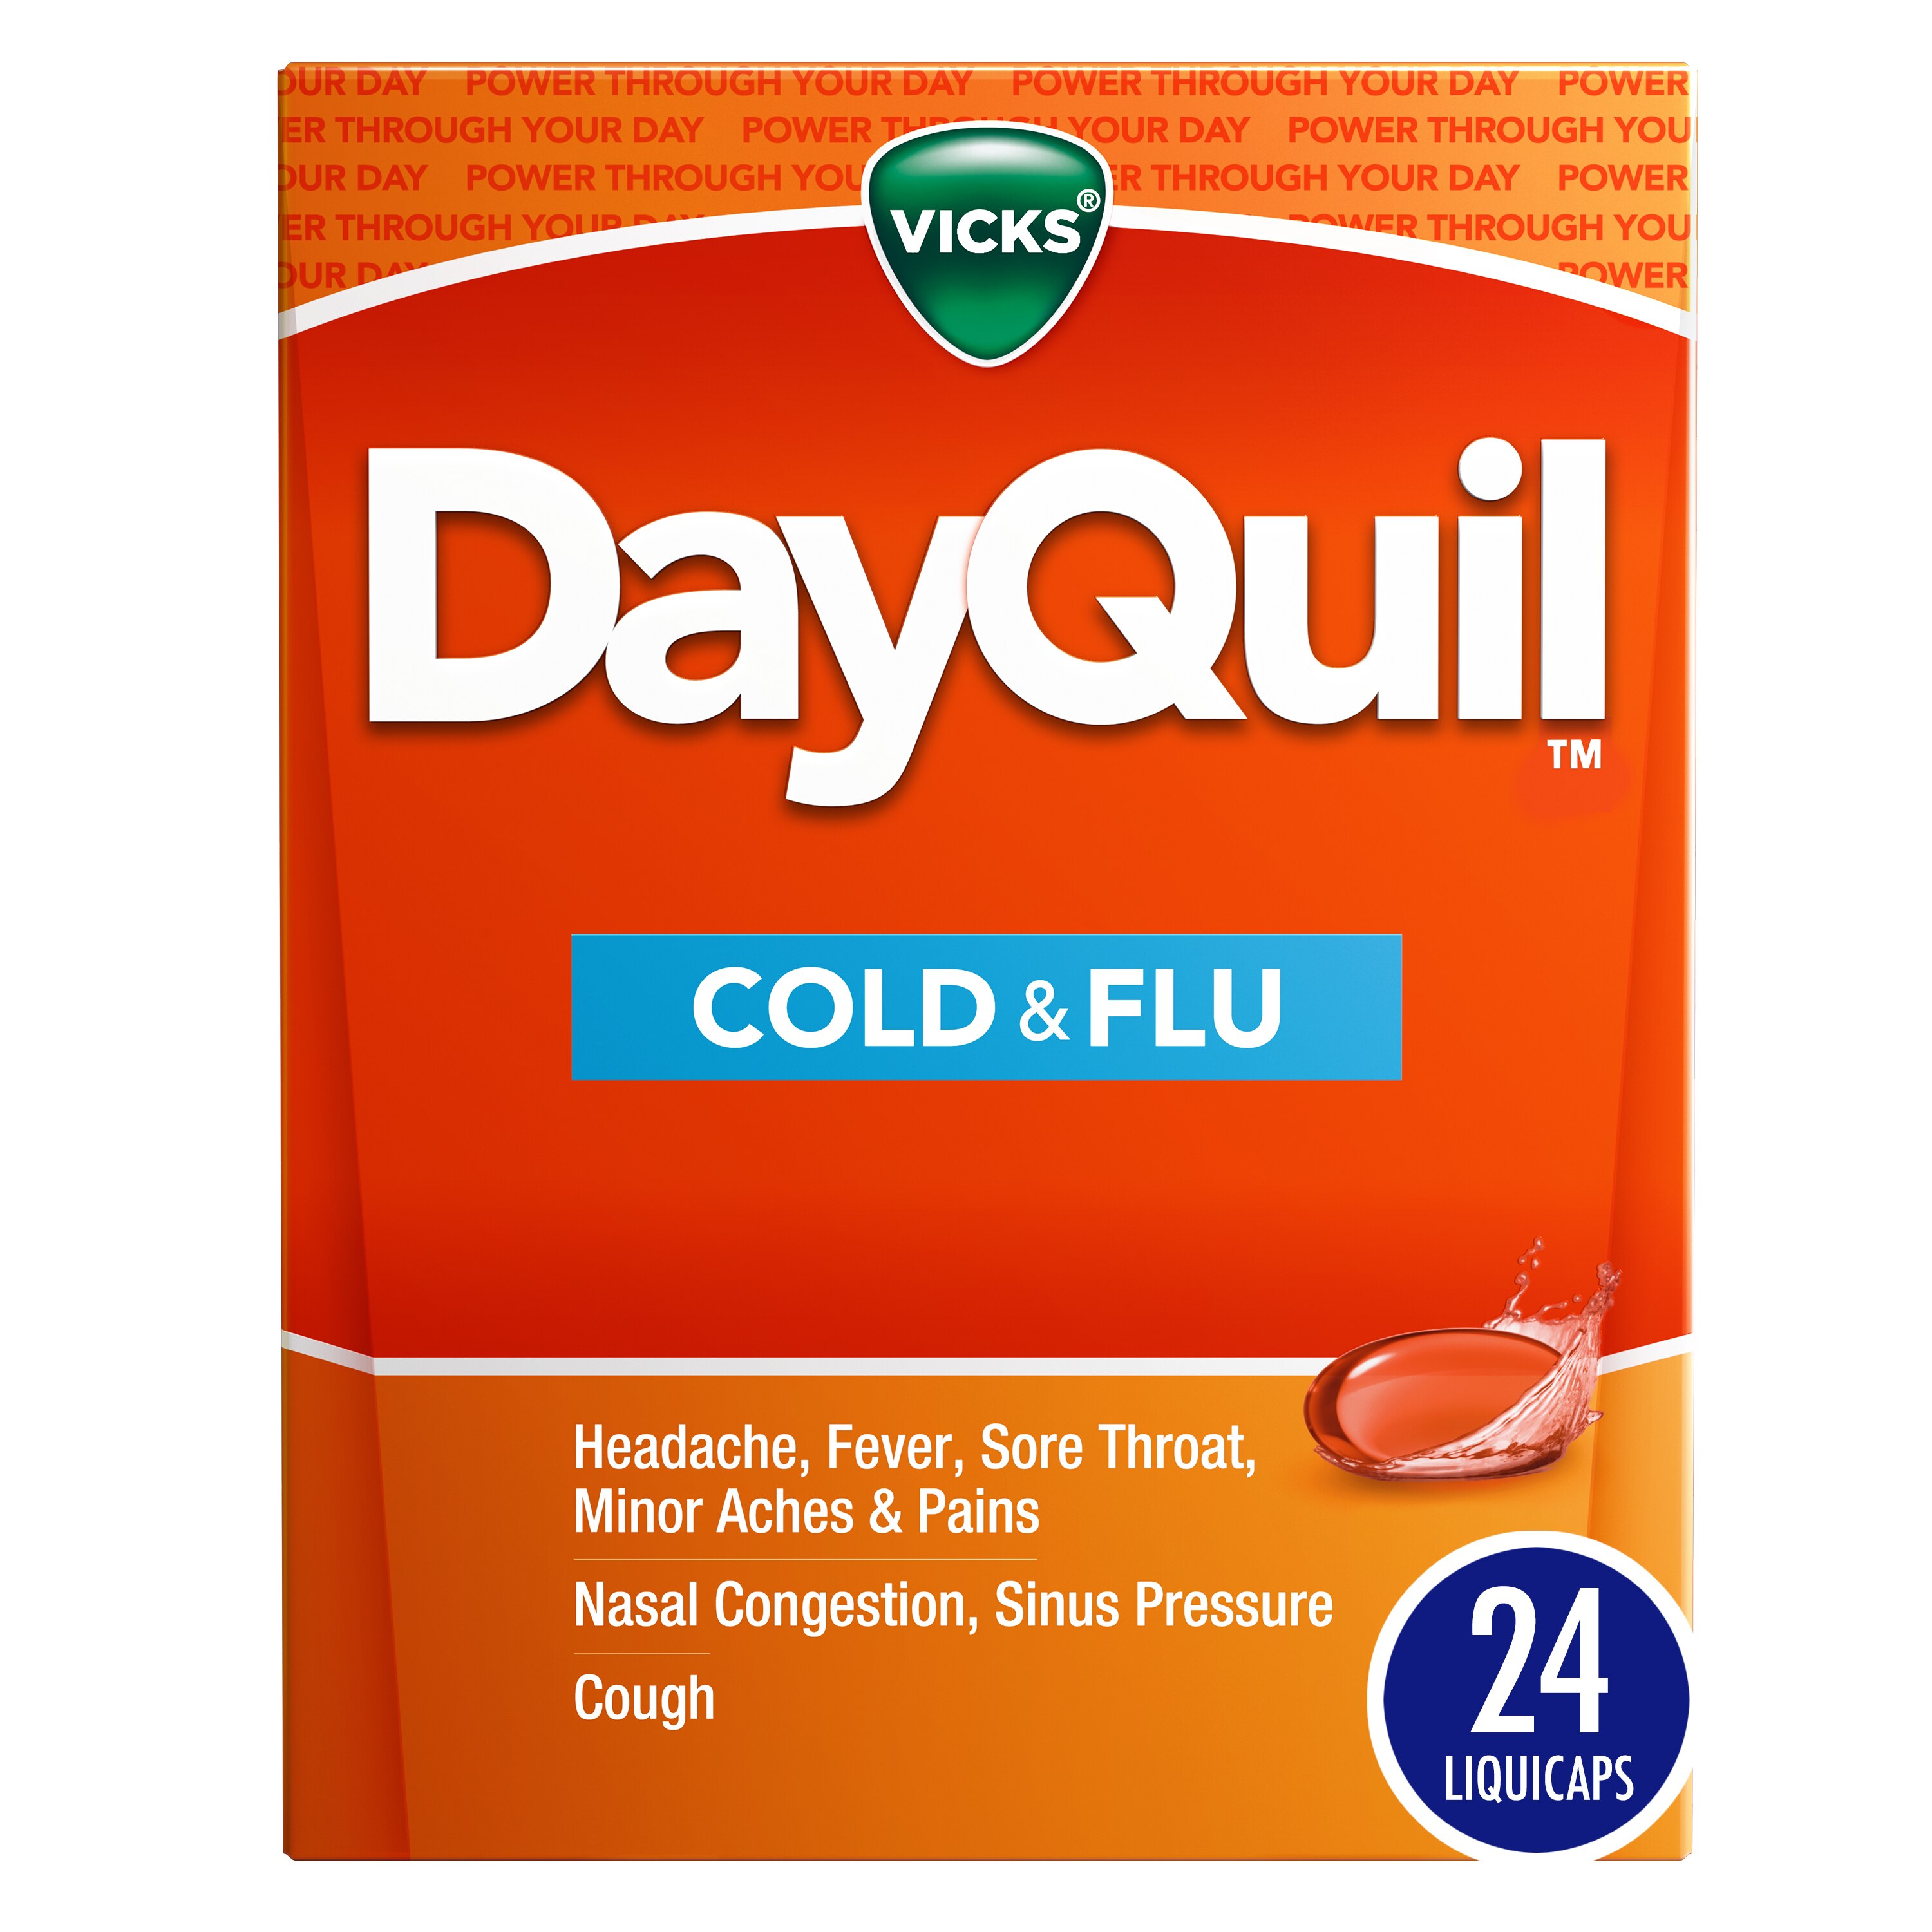 Vicks DayQuil Cold & fl.u Multi-Symptom Relief, 24 CT